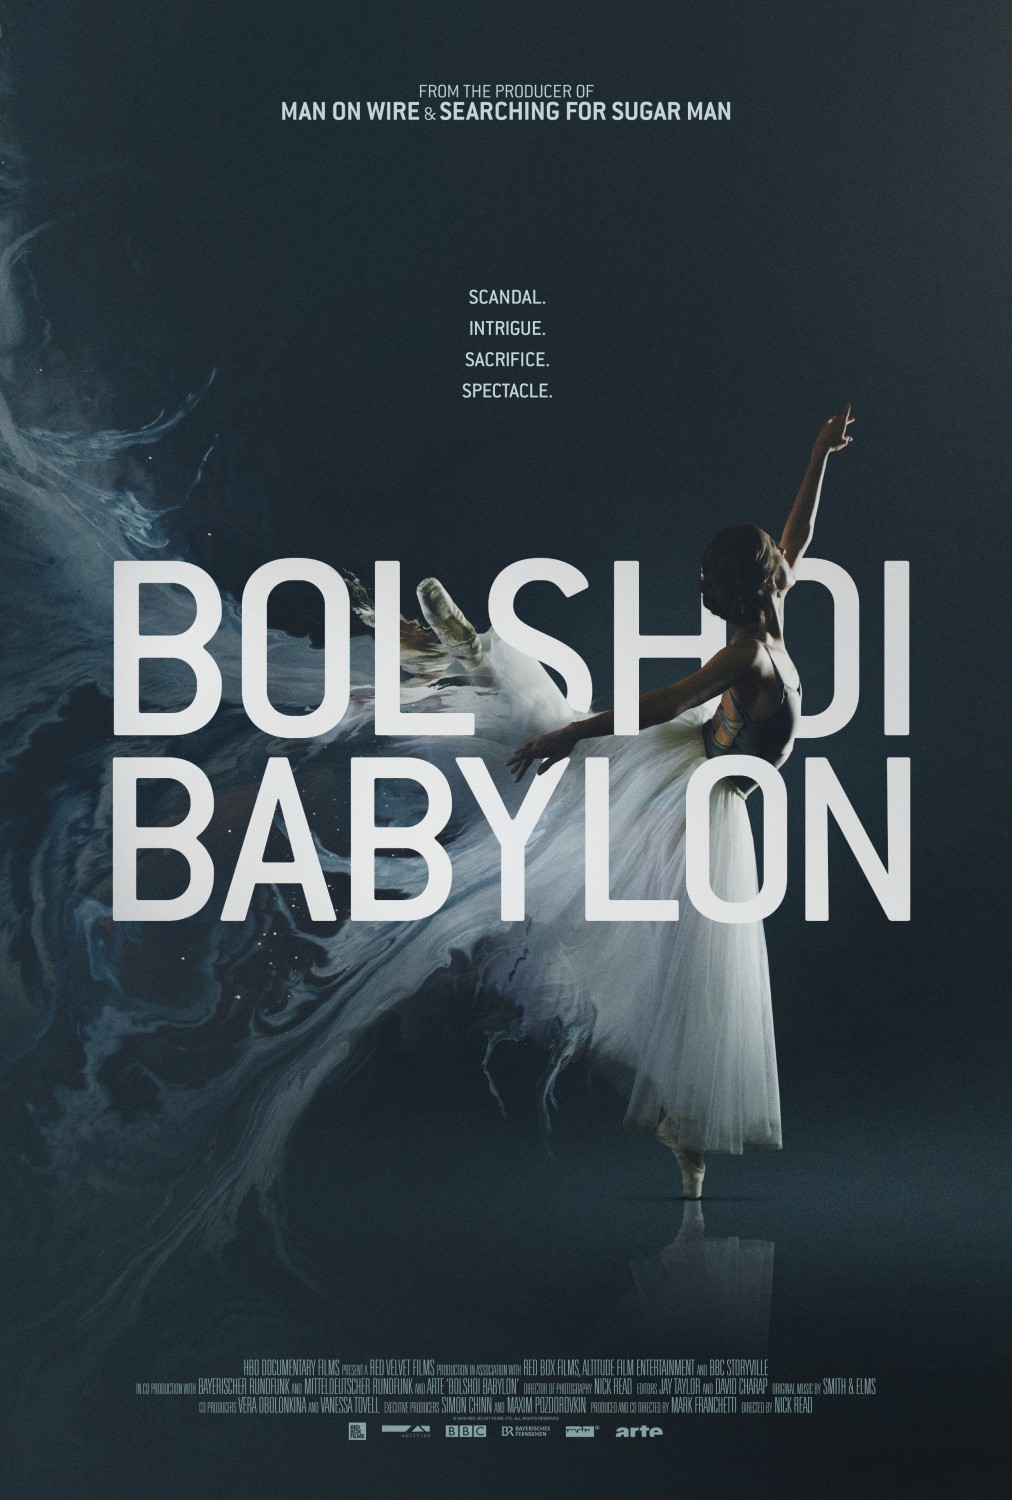 Extra Large TV Poster Image for Bolshoi Babylon (#2 of 2)